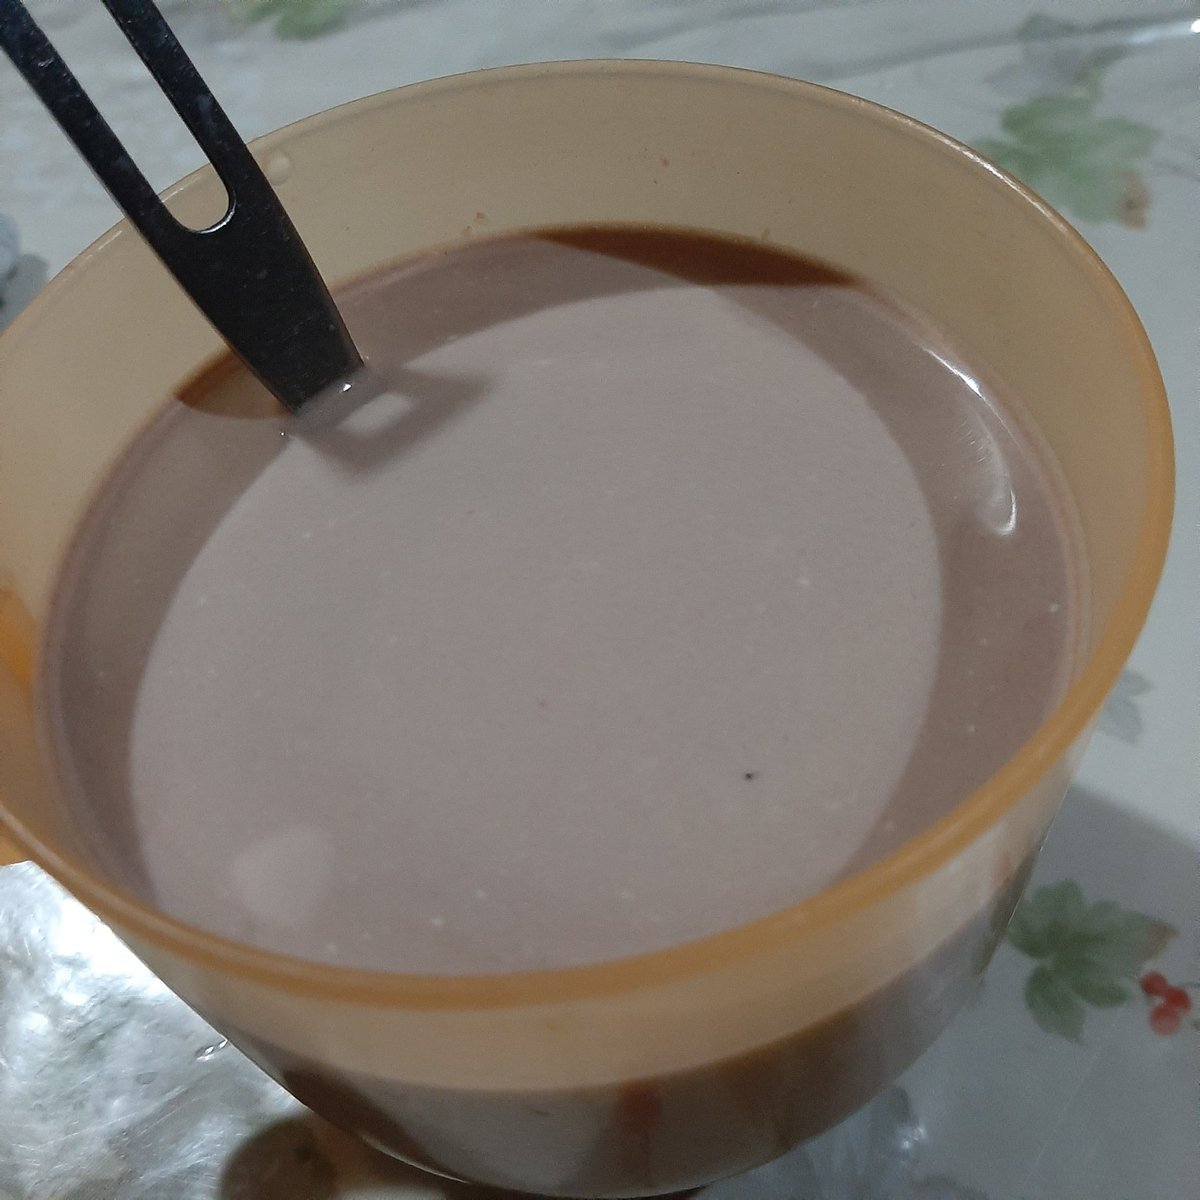 DAY #25 ㅡ 18/05 03:55 AMga napsu makan, yaudah susu coklat aja buat sahur(":